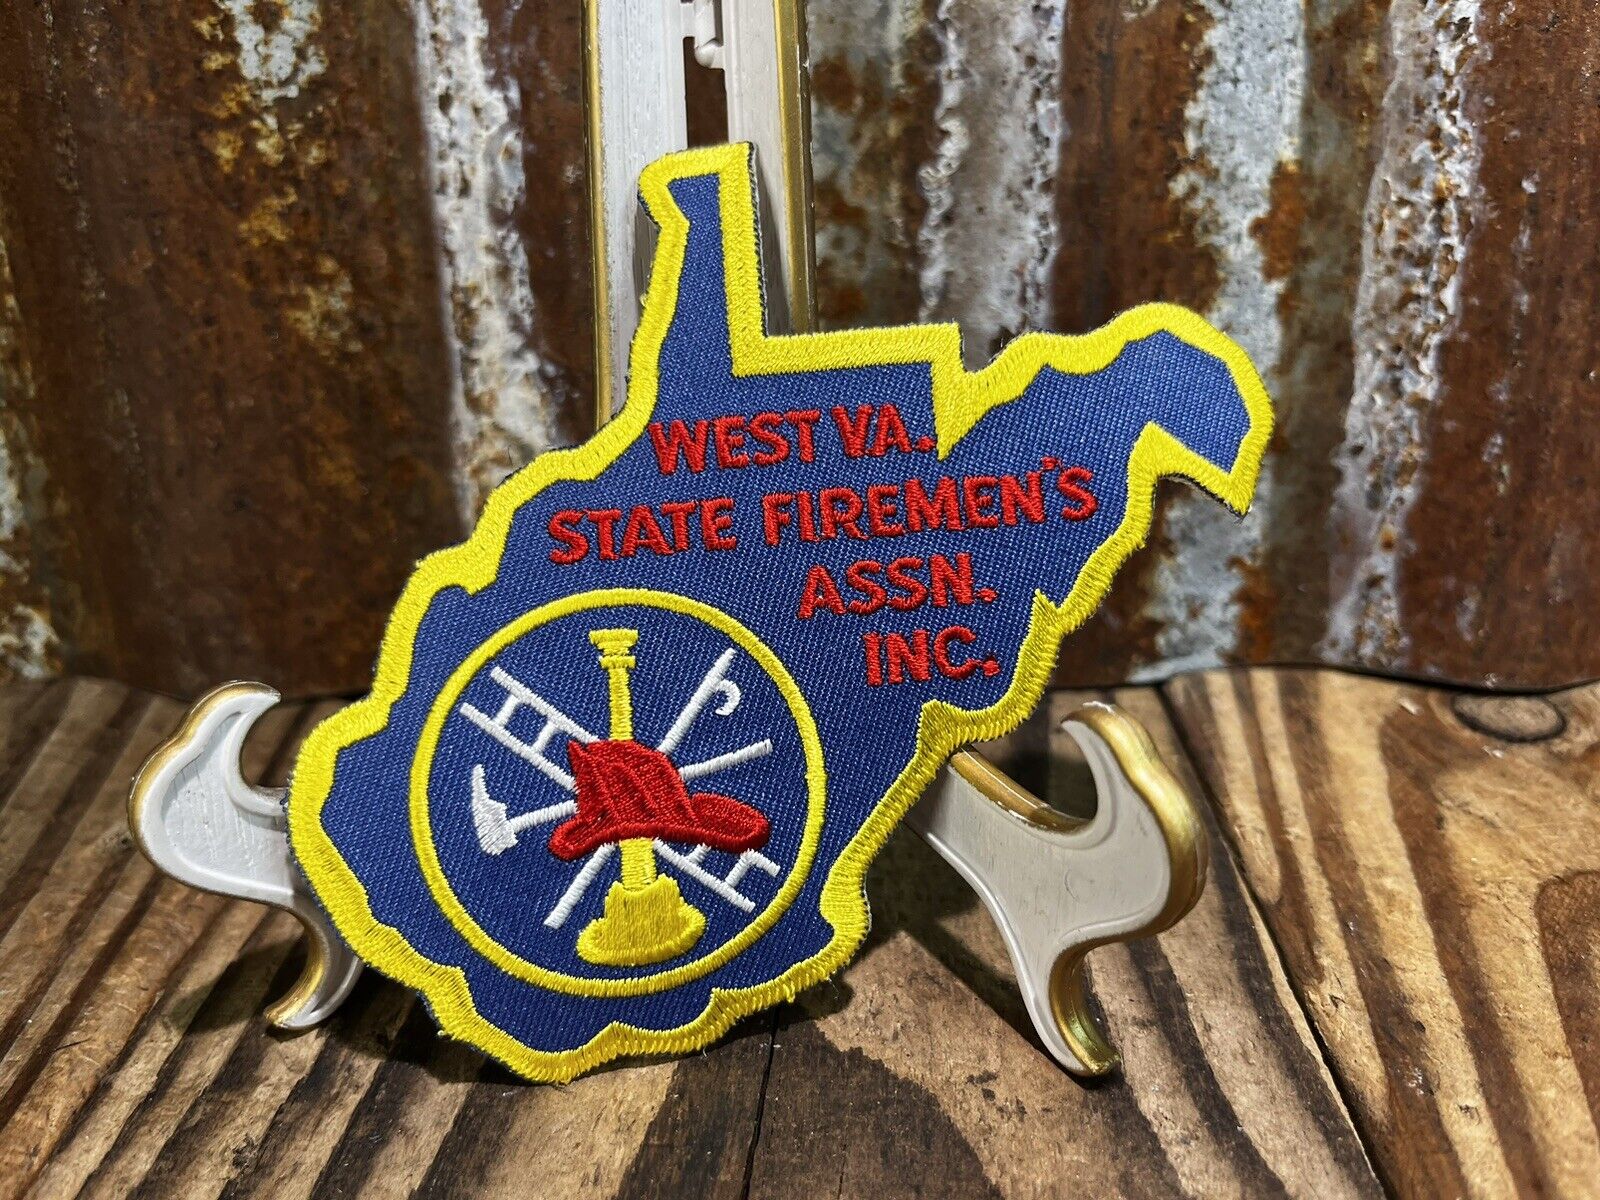 West Virginia State Firemen’s Association Inc. New Patch